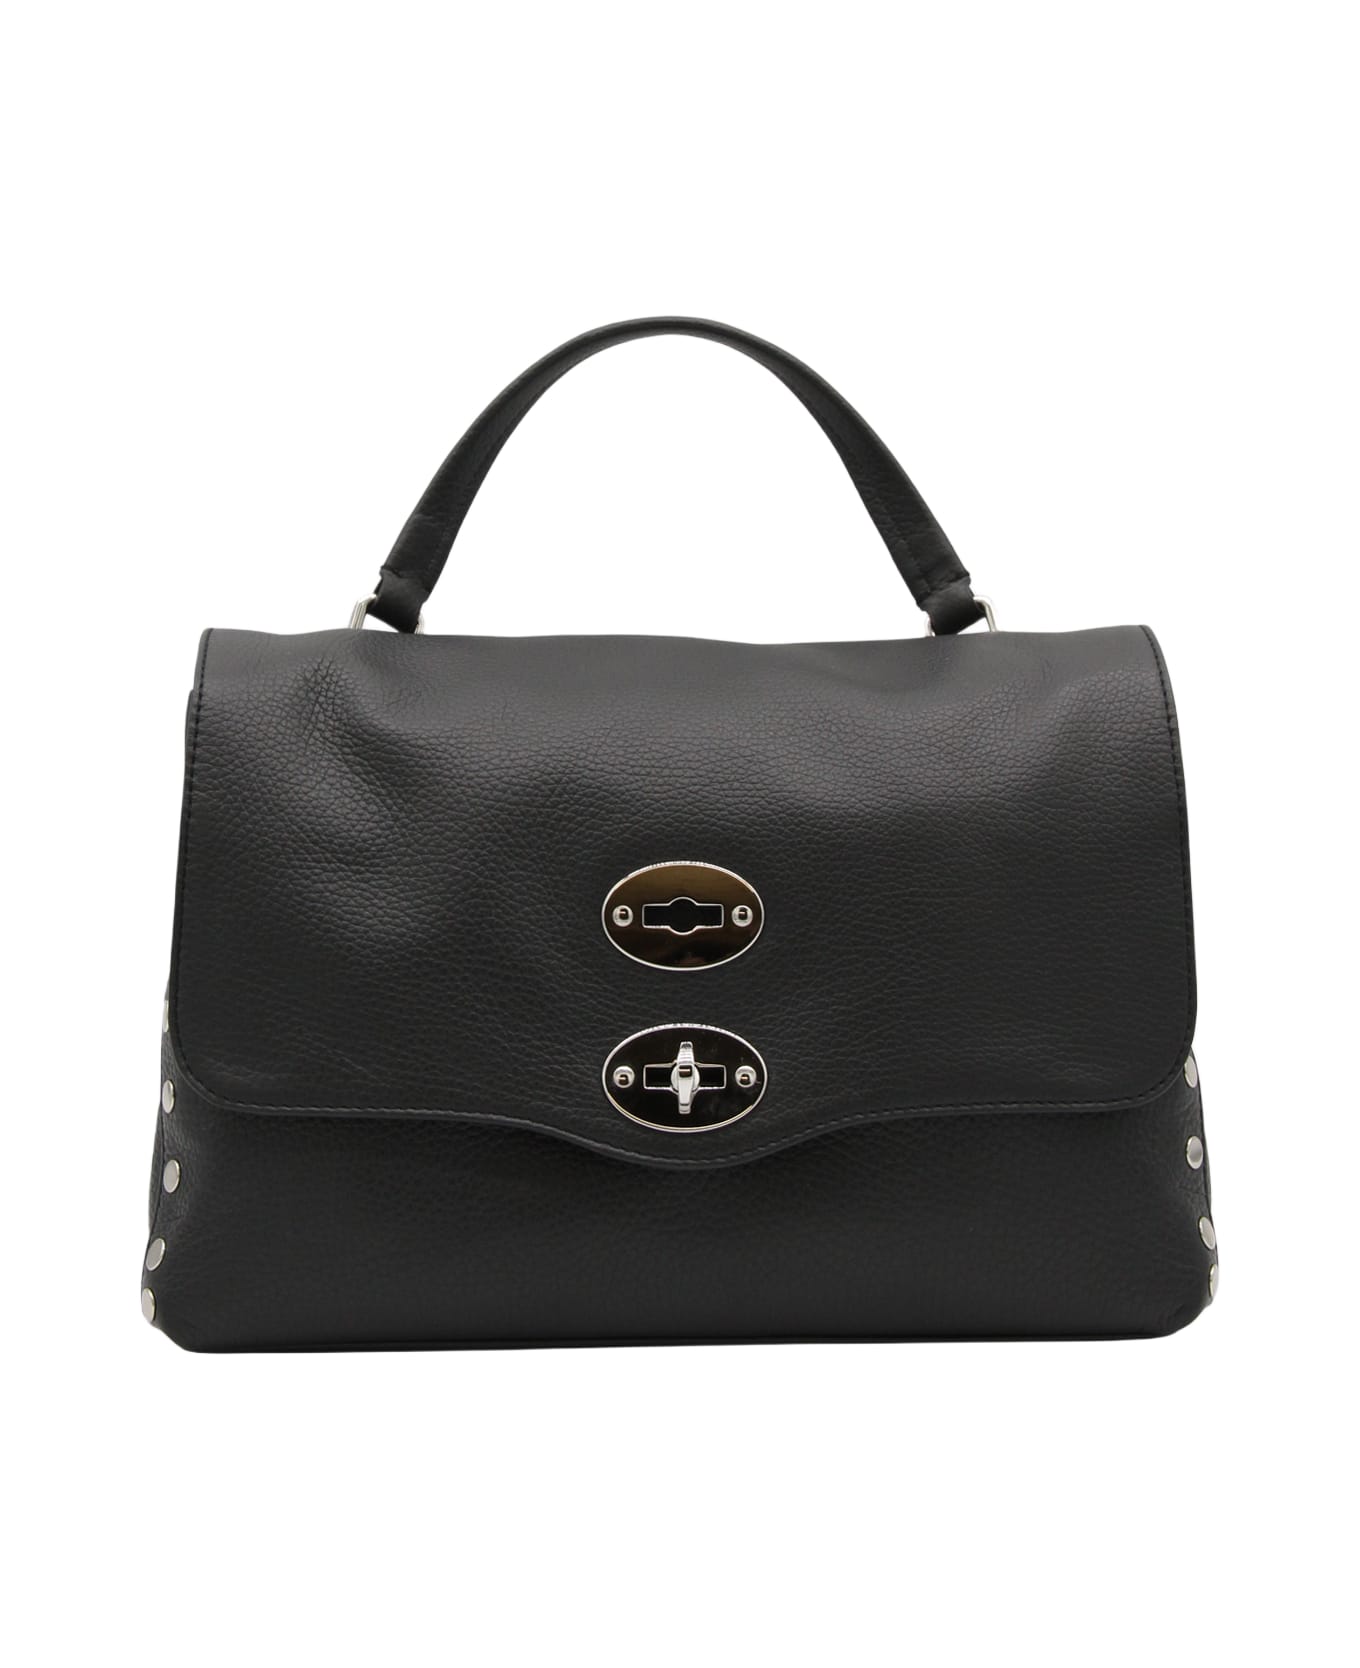 Zanellato Black Leather Postina S Top Handle Bag - Black トートバッグ